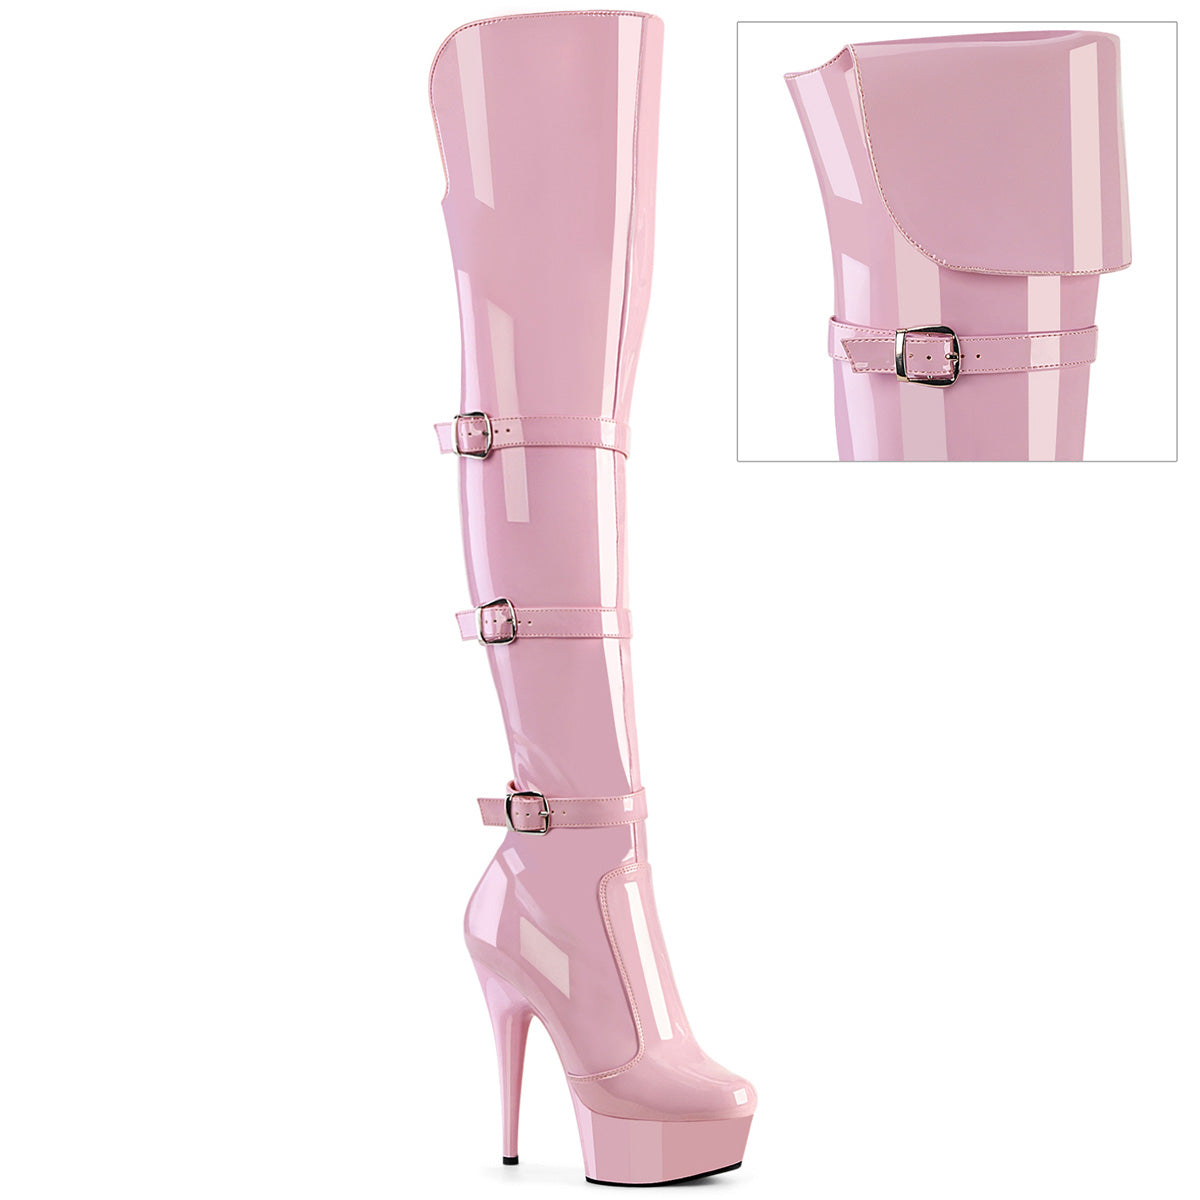 Delight-3018 Pink Platform Thigh High Boots